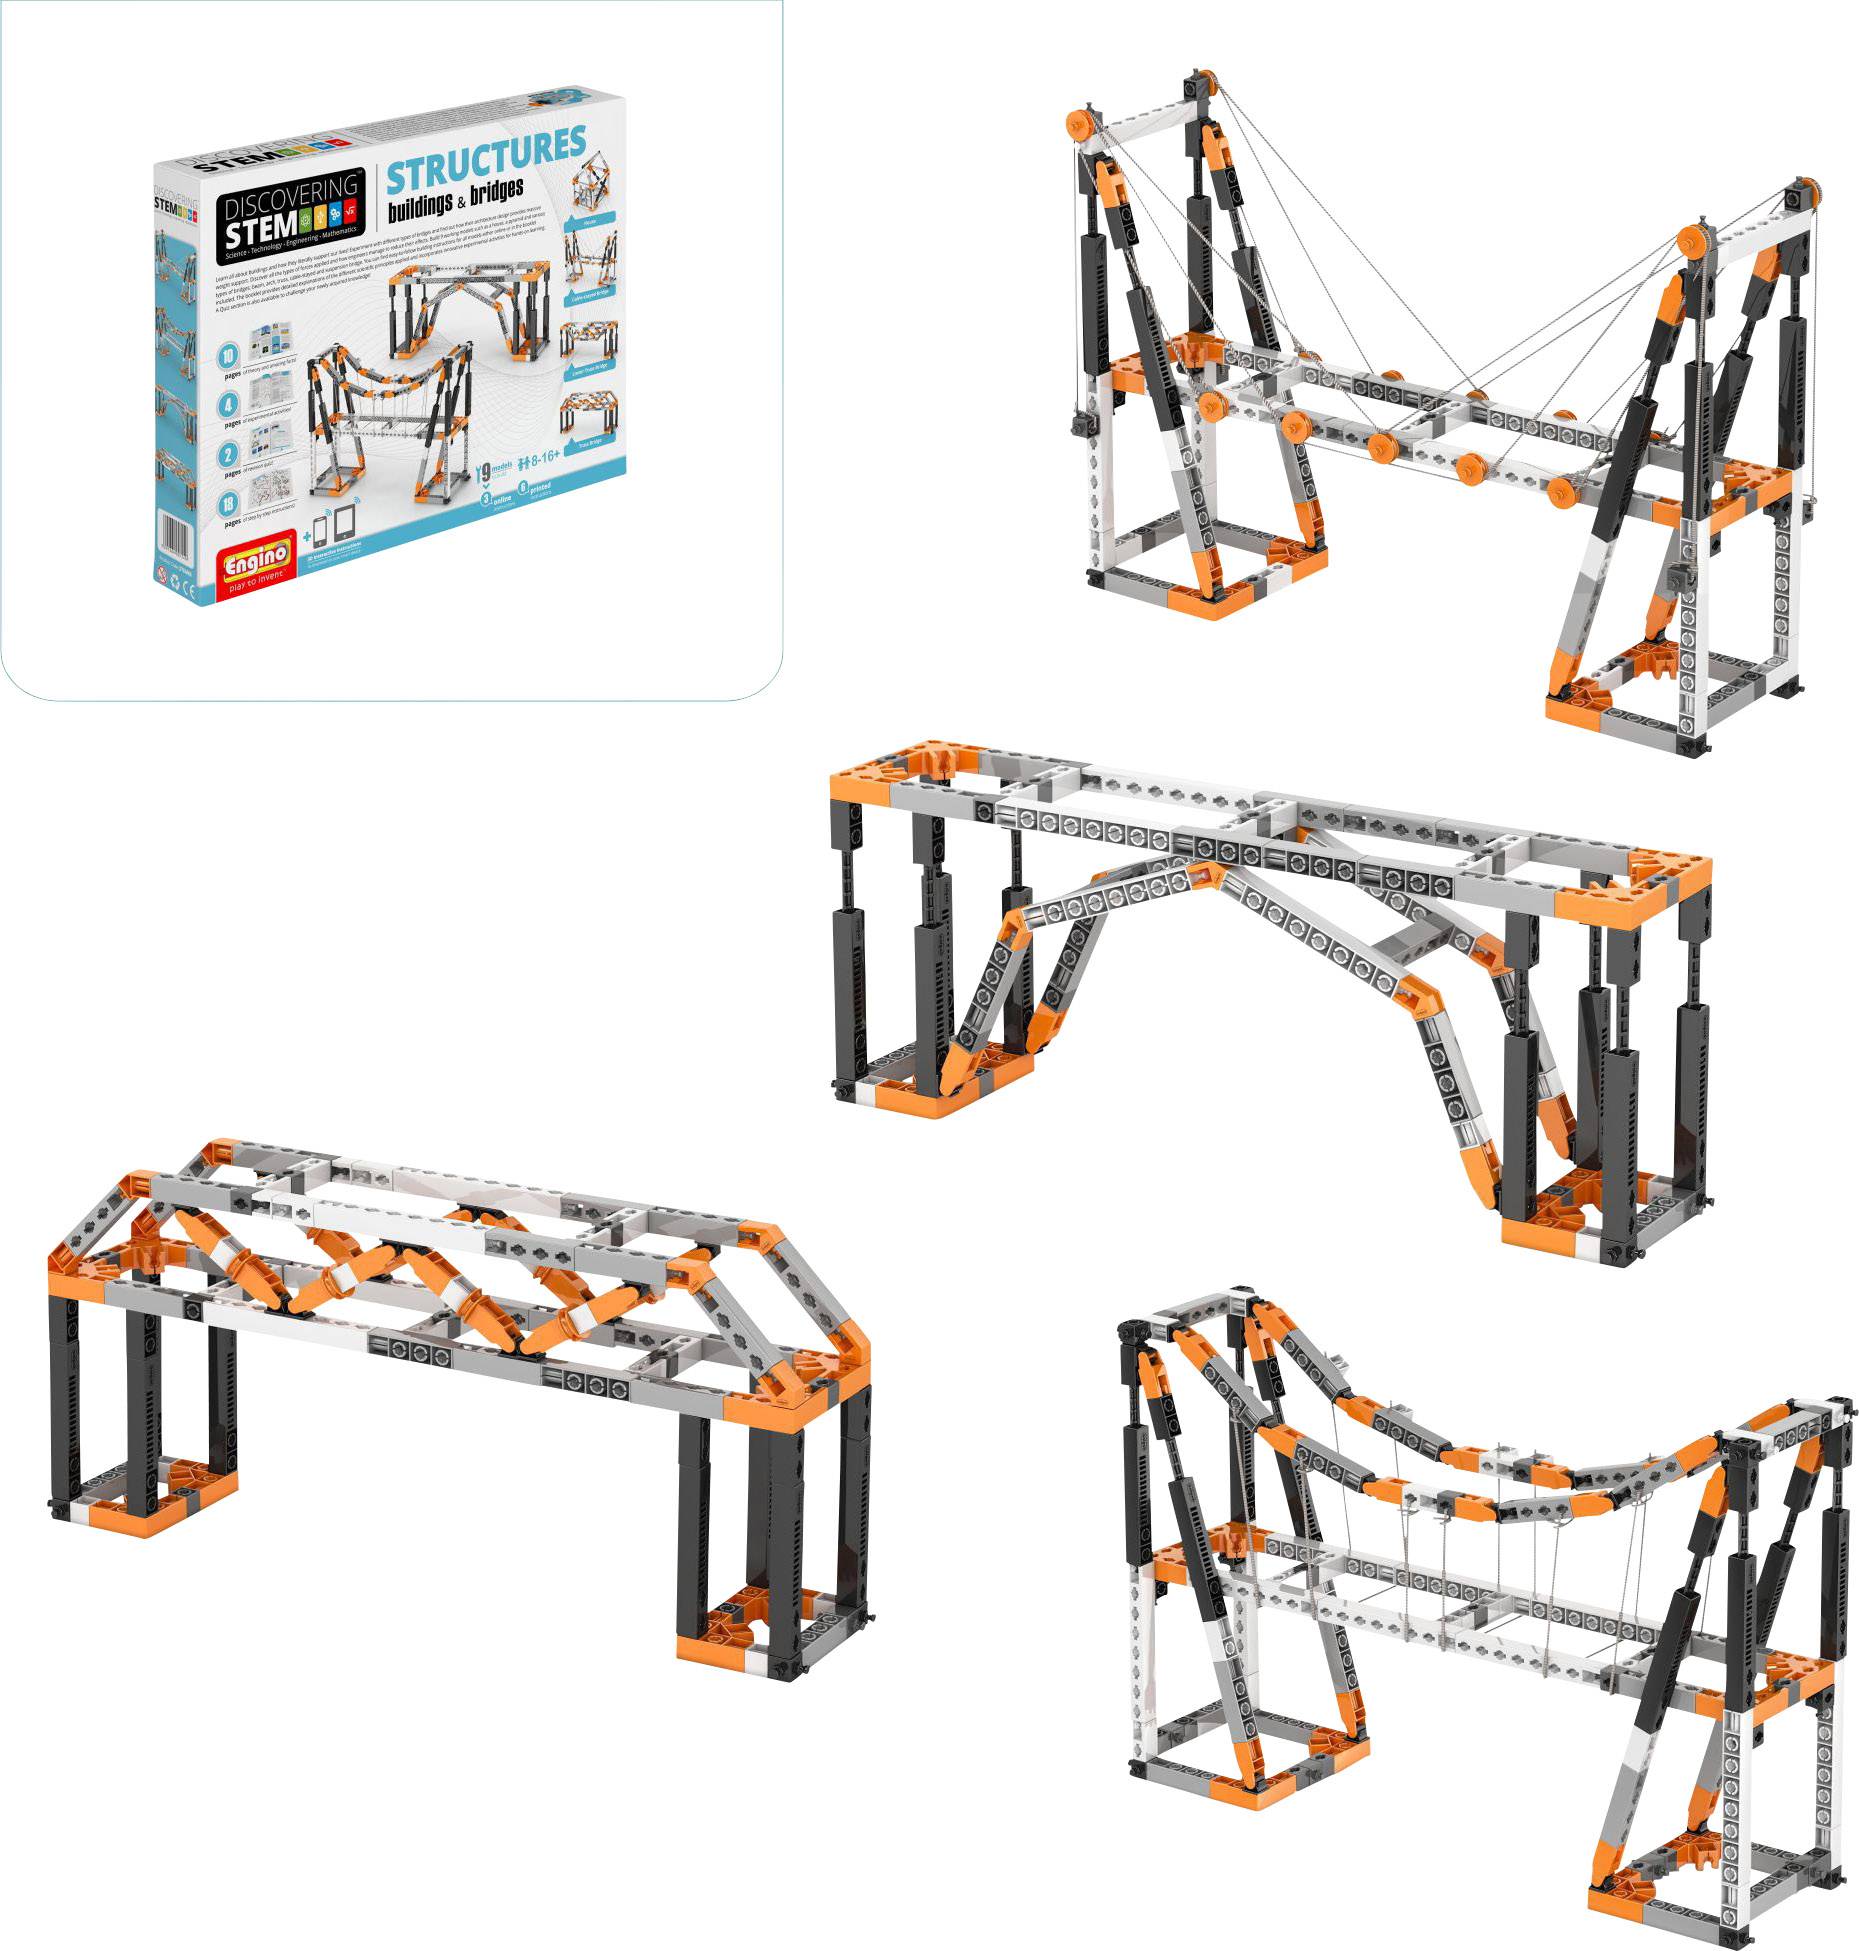 engino structures & bridges kit